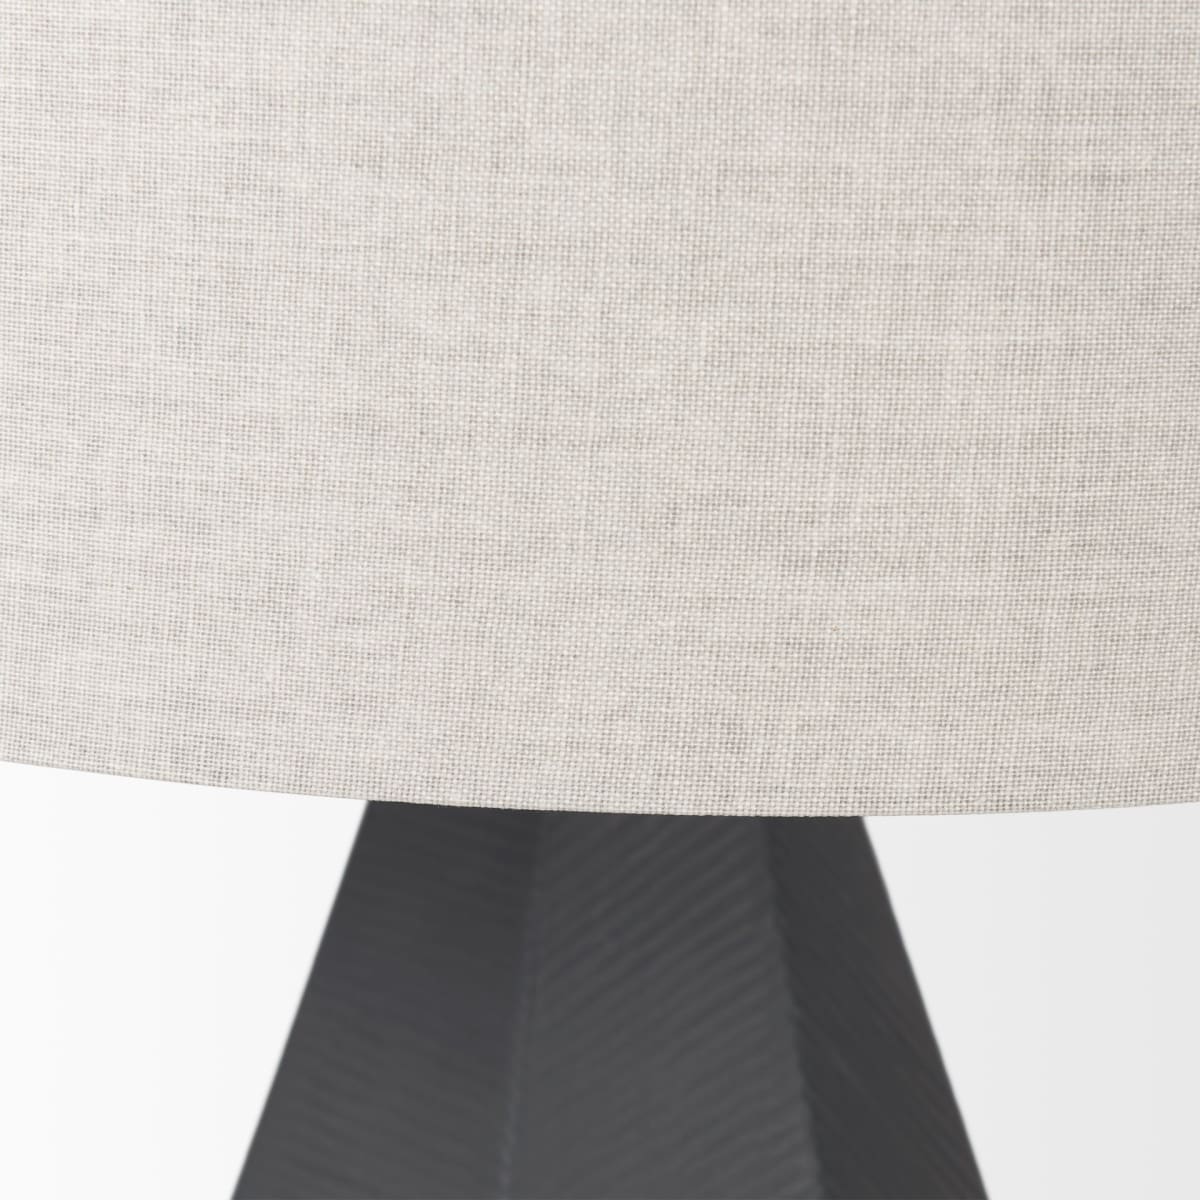 Piven Table Lamp Black Ceramic - table-lamps